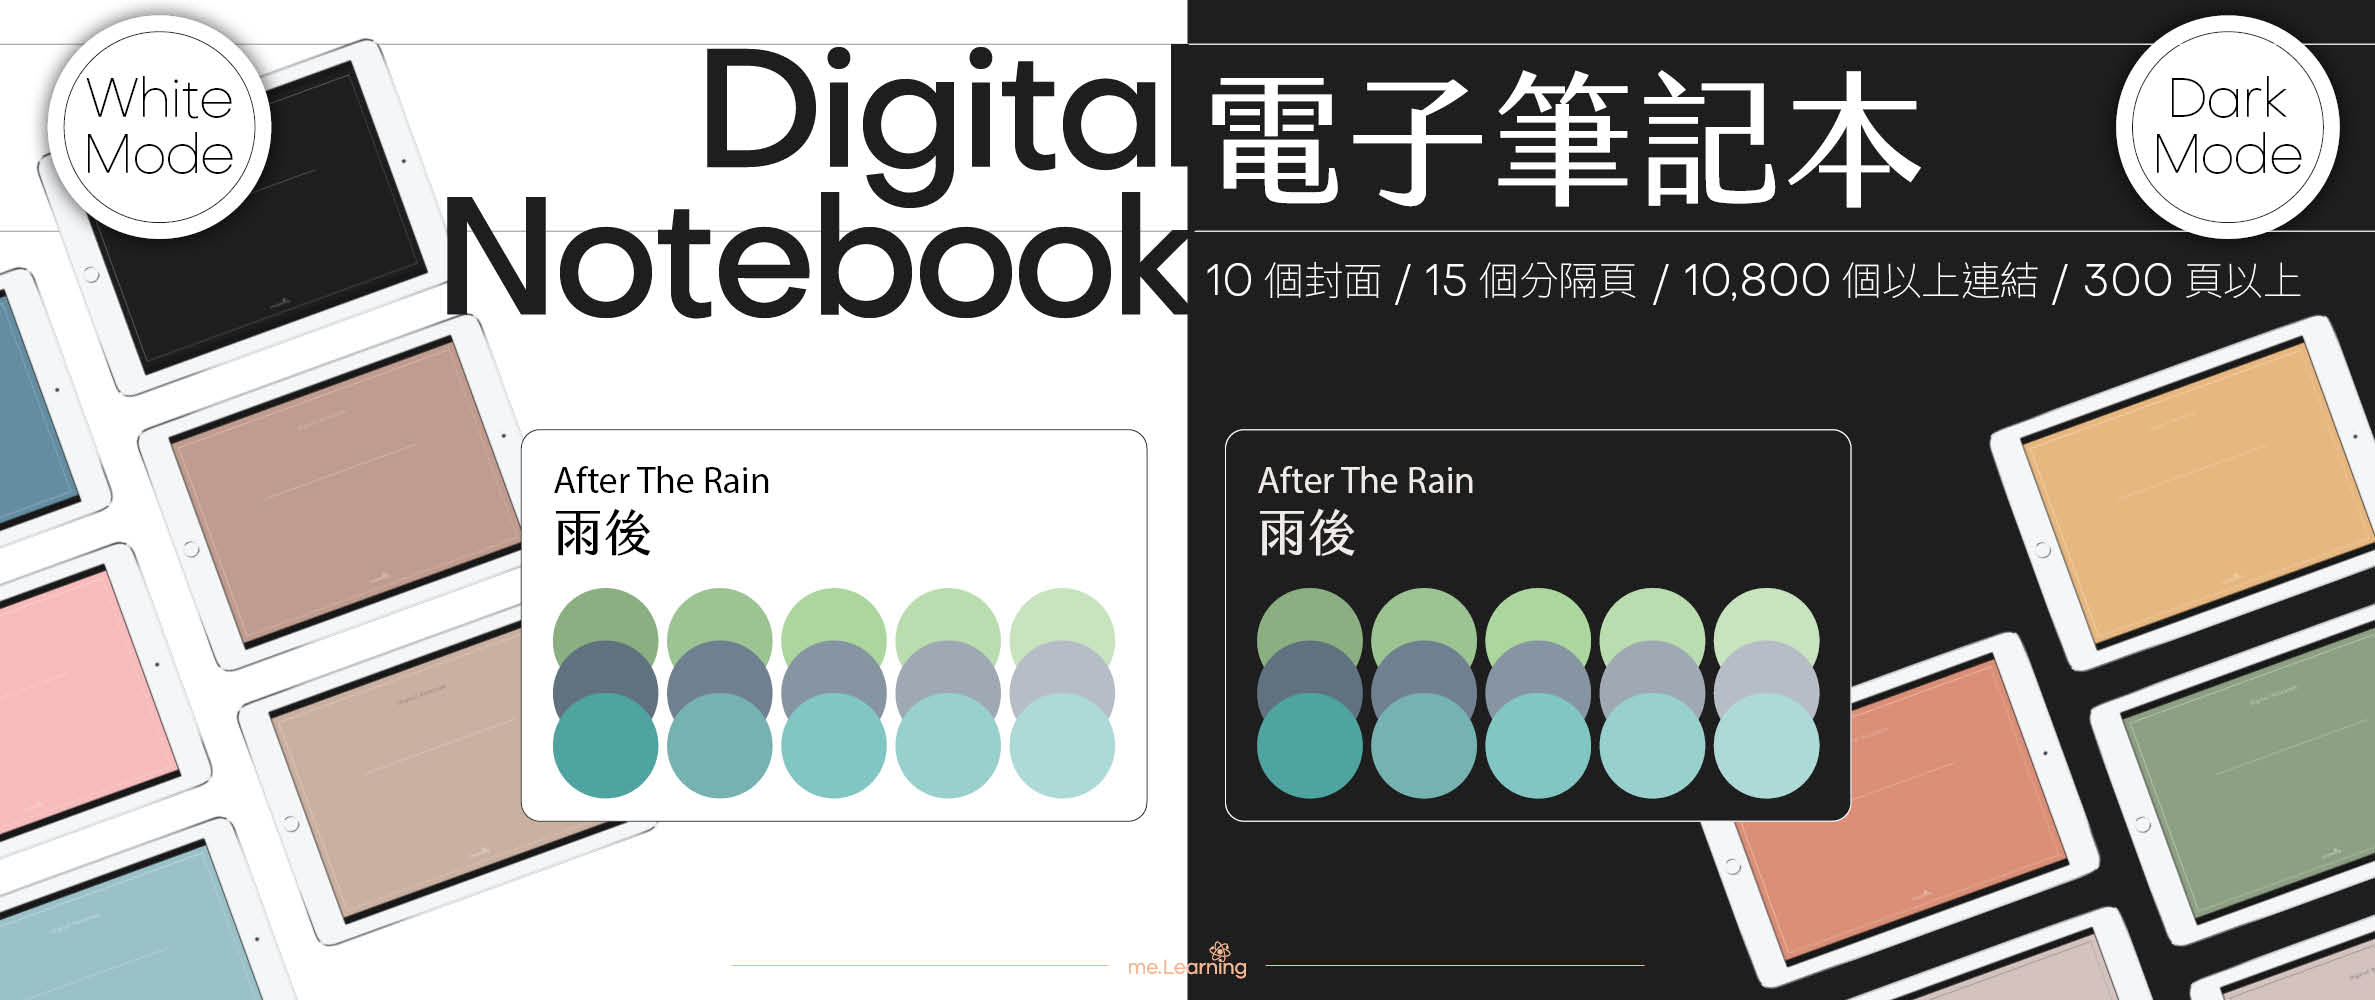 Notebook-Landscape-Solid Color Cover-15 Tabs-After The Rain-Dark Mode 不想念書時上市 | me.Learning